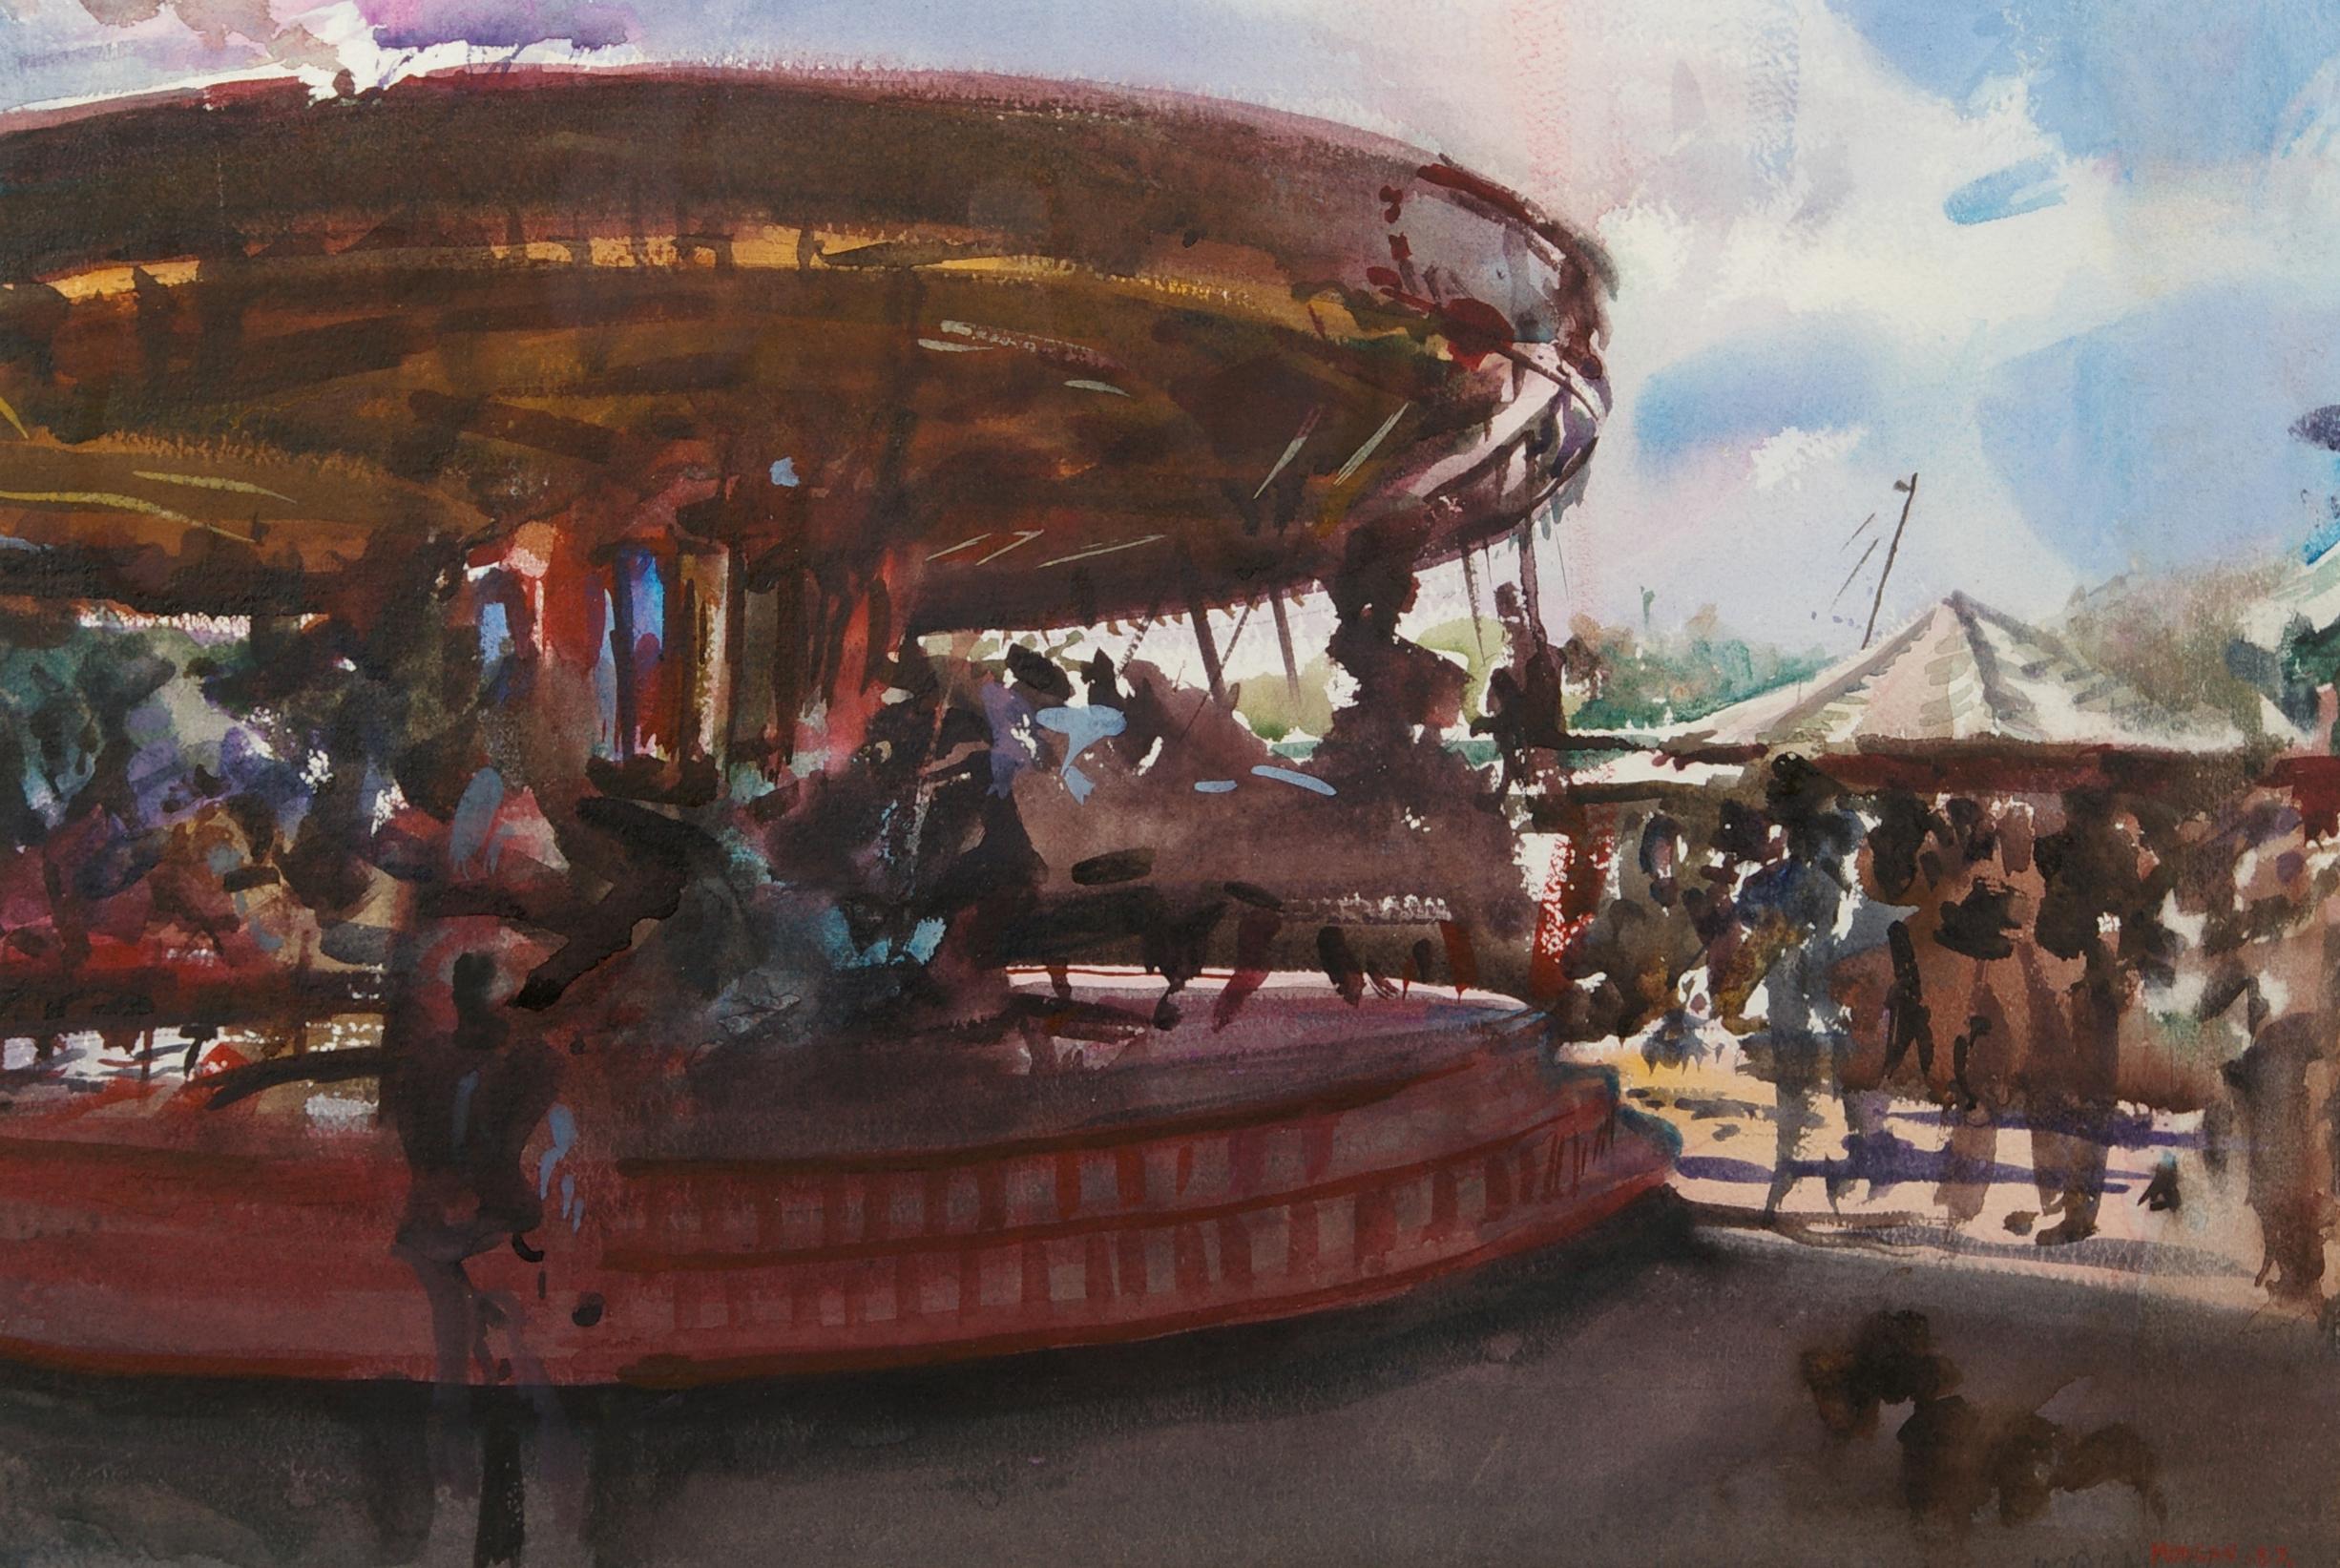 The Carousel - Art by Howard Morgan